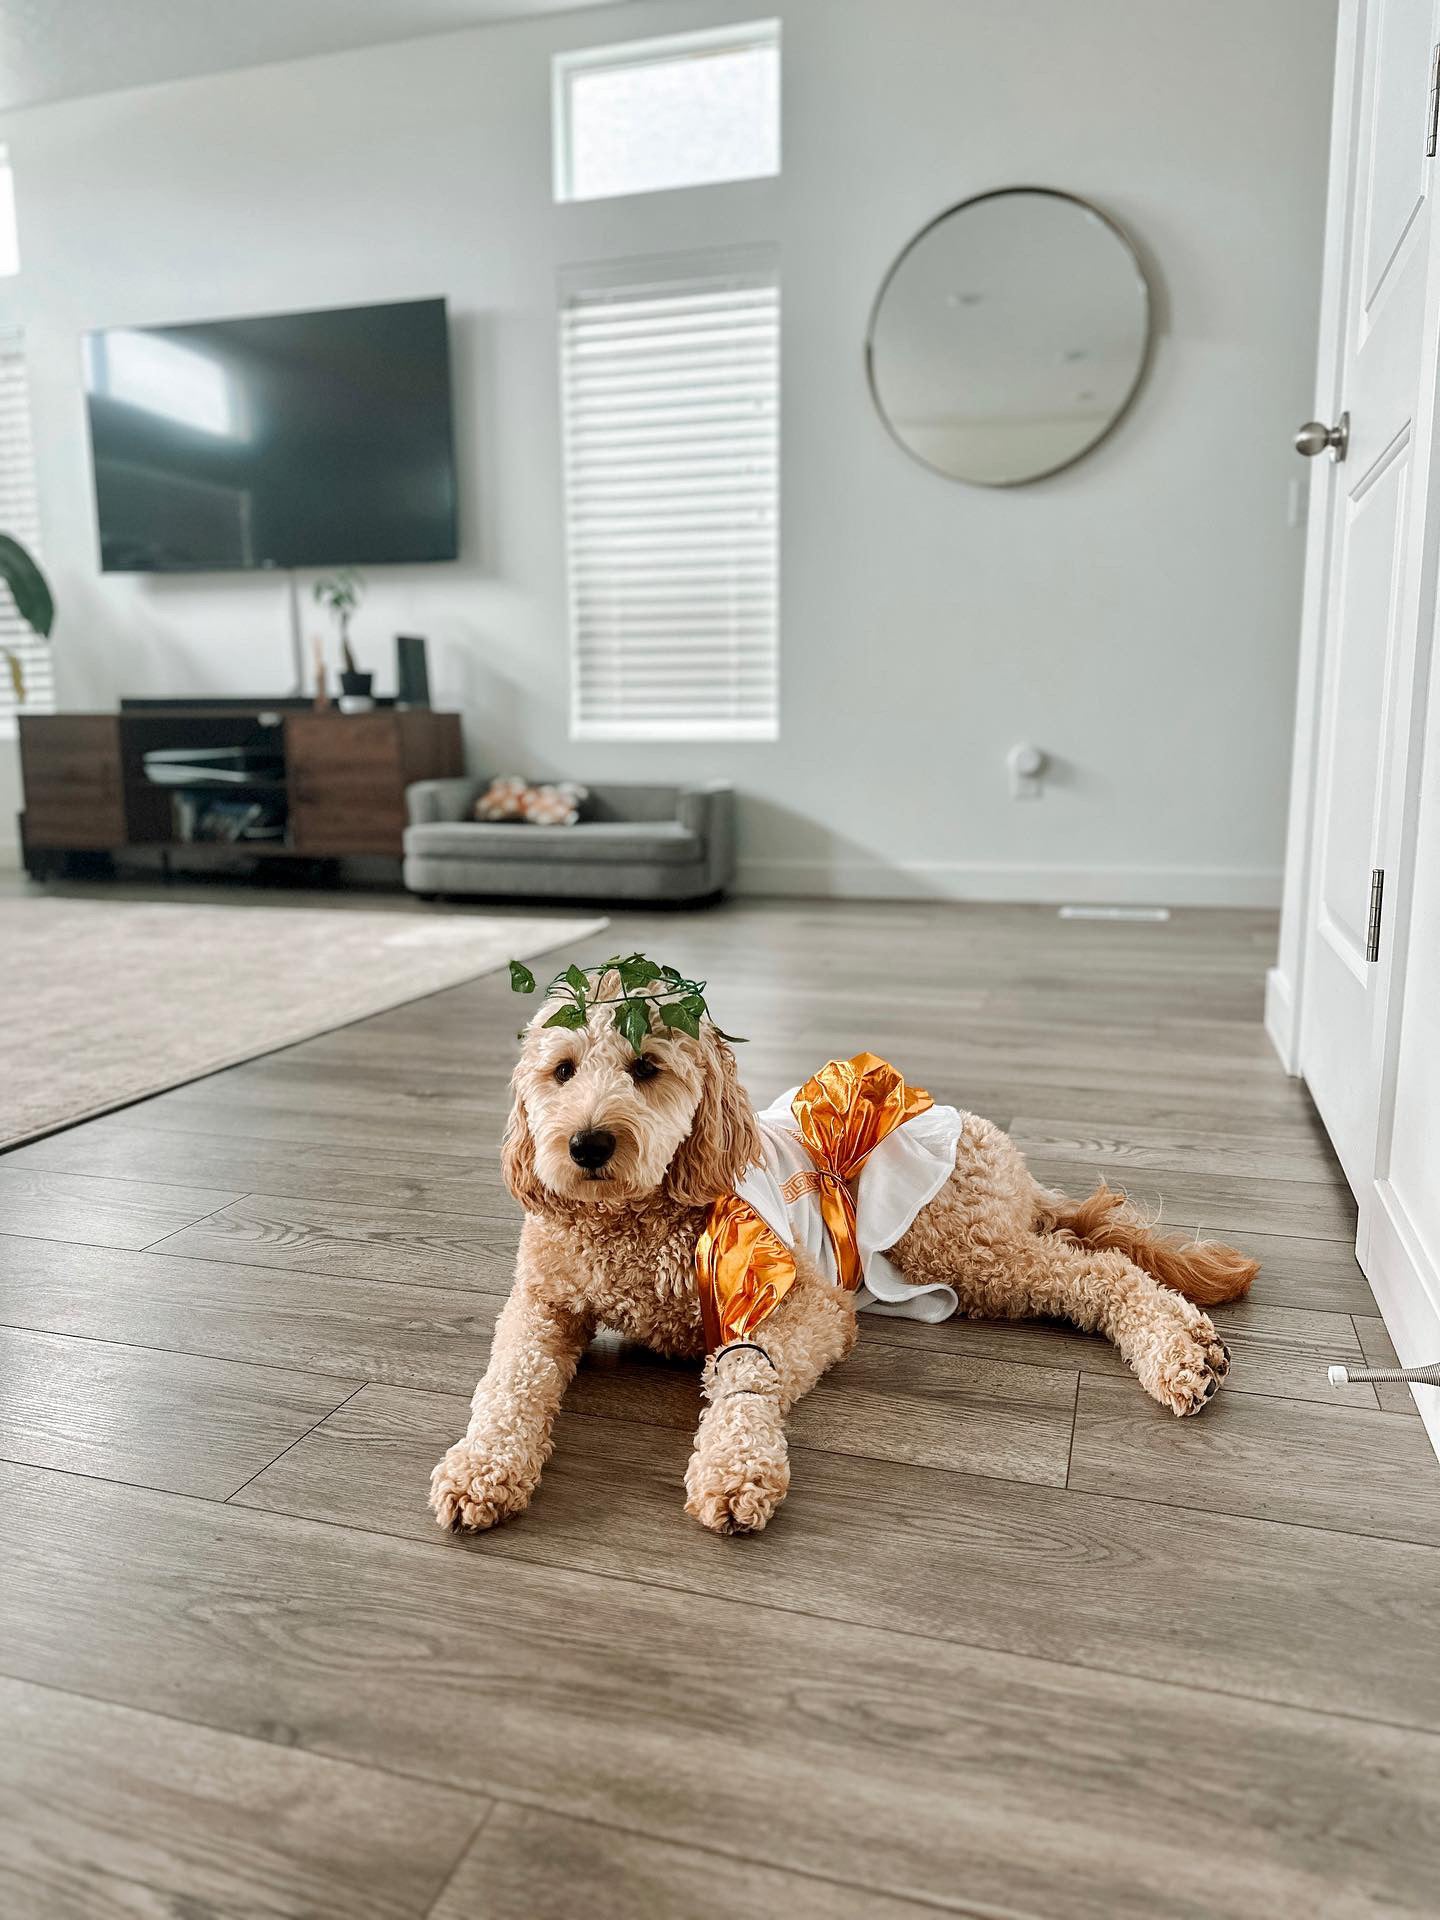 Midlee Toga Dog Costume